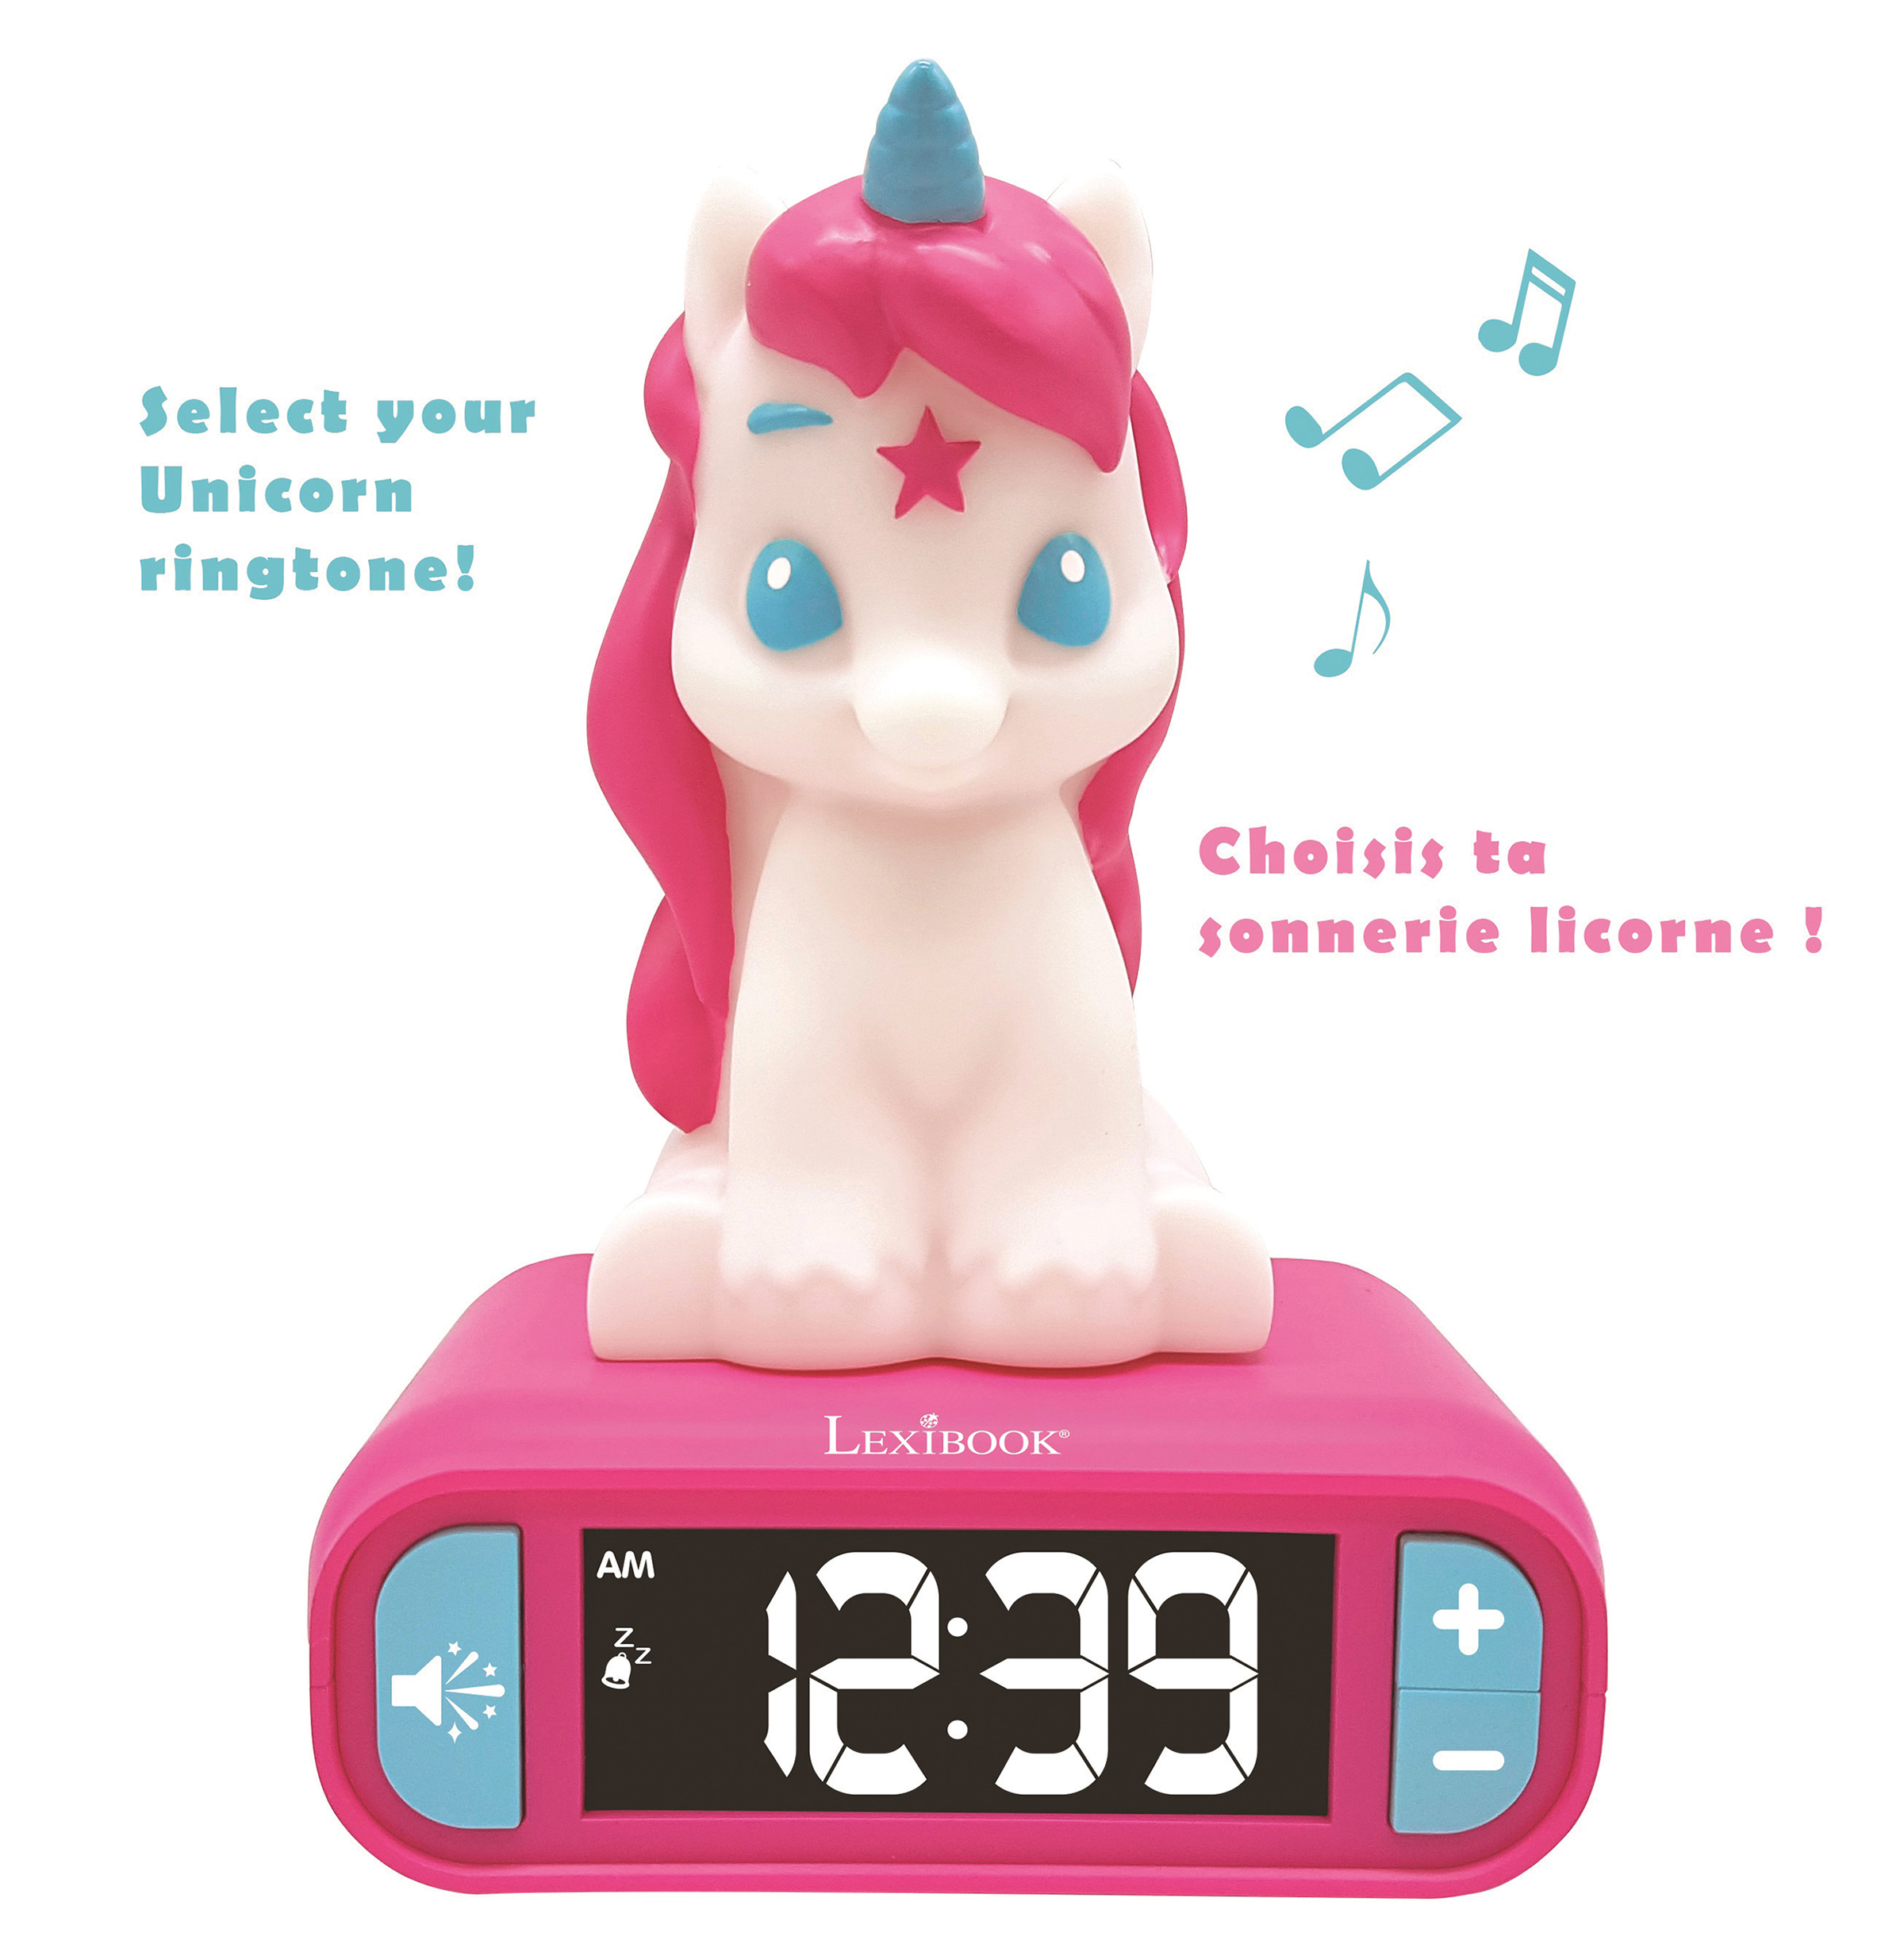 Lexibook - Unicorn Digital Alarm Clock for kids with Night Lightn Snooze and Radio, Childrens Clock, Luminous Unicorn, Pink colour - RL800UNI - image 5 of 8